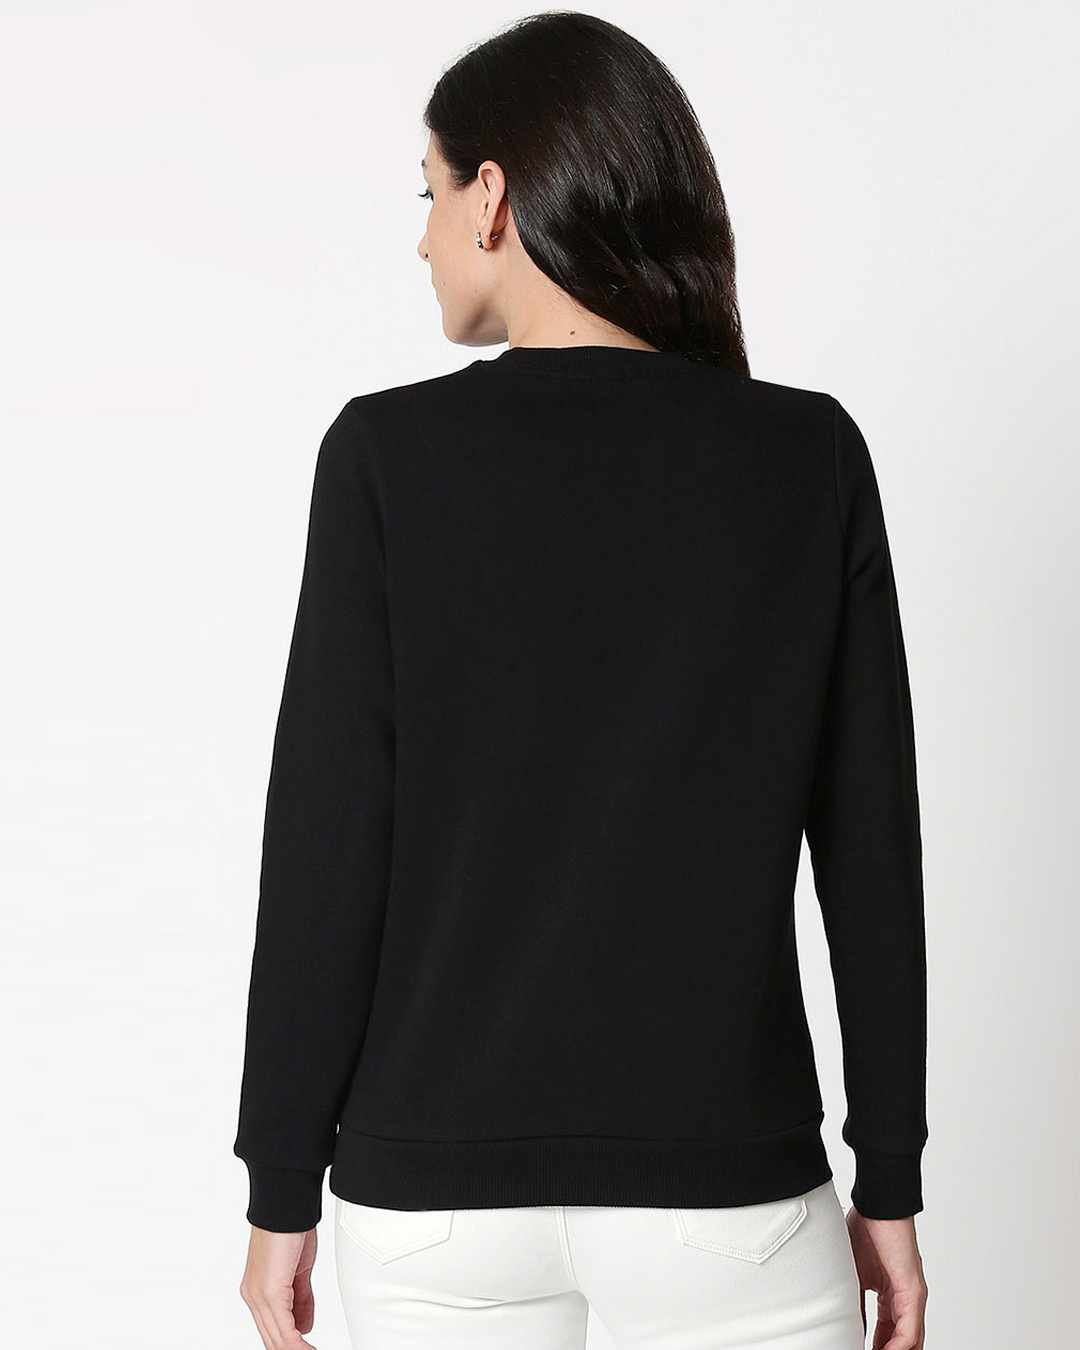 Shop Agree With Me Fleece Sweatshirt (DL) Black-Back